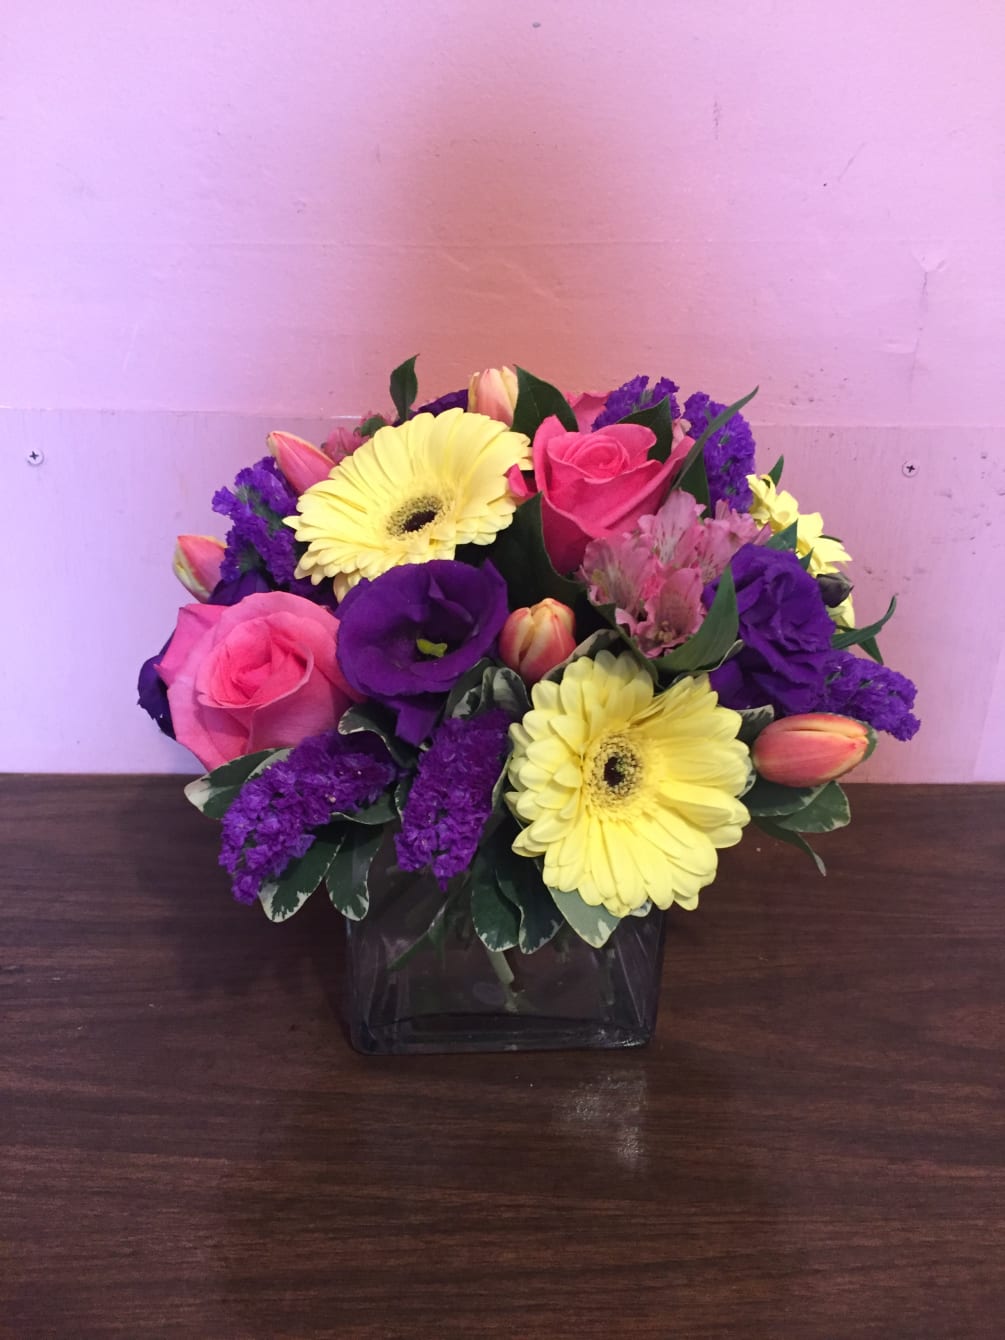 Cube vase with pale yellow gerbera daisy, dark purple lisianthus, purple statice